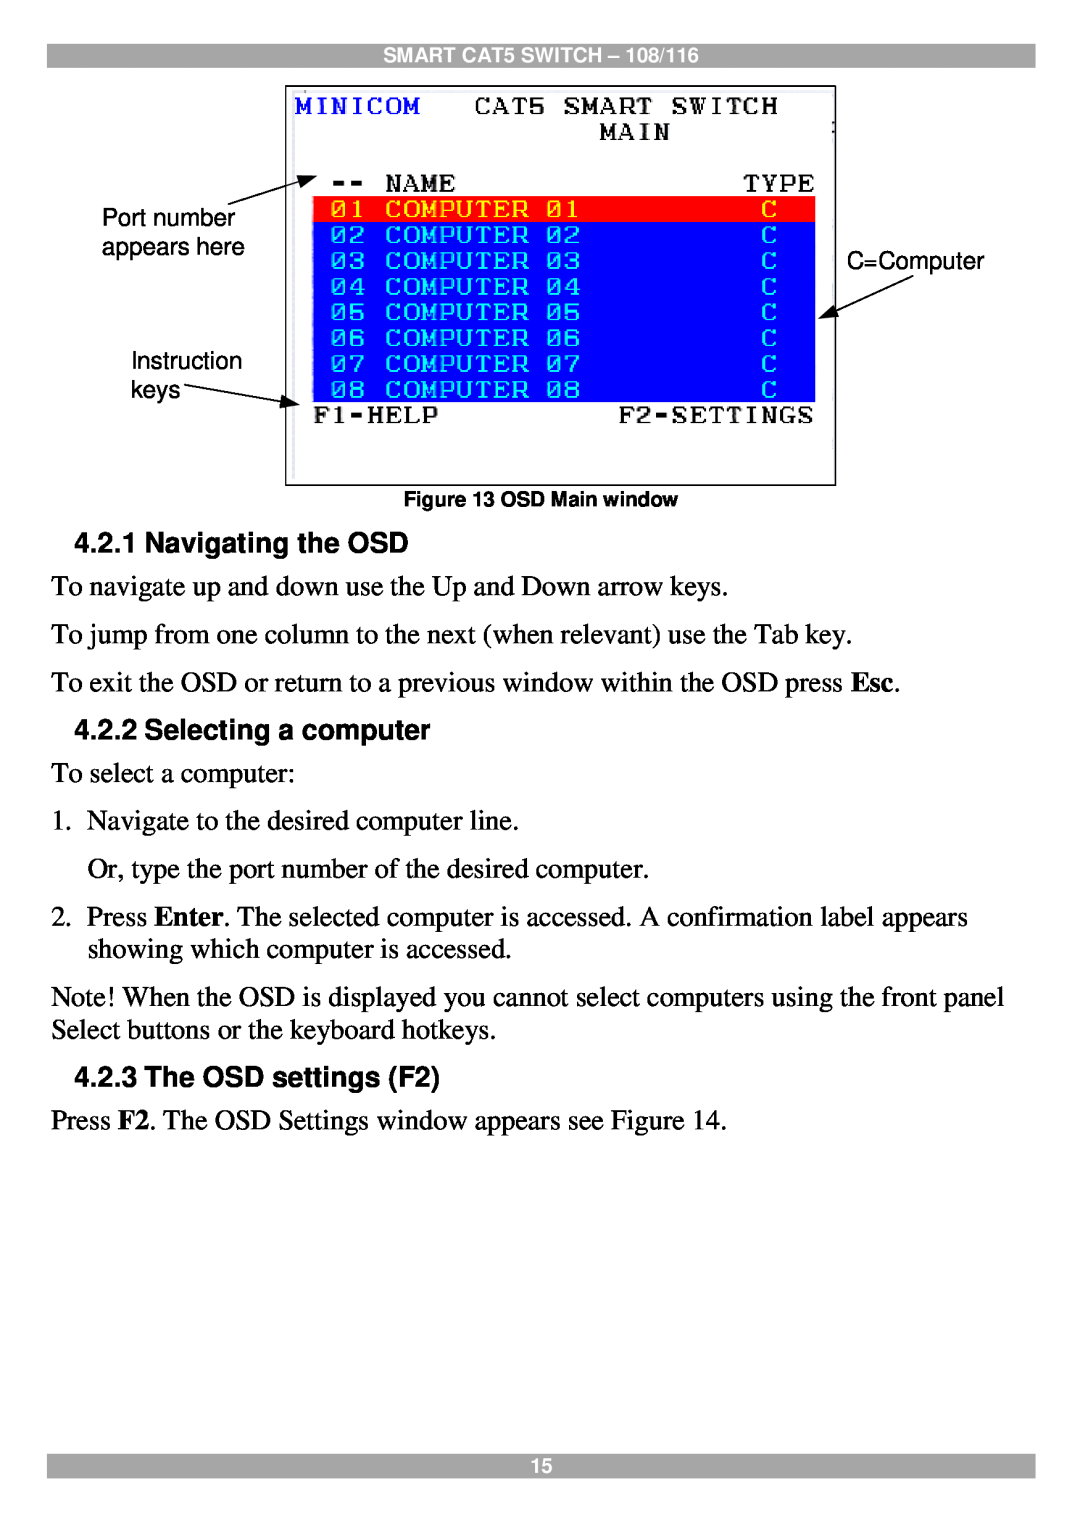 Tripp Lite 108, 116 manual Navigating the OSD, Selecting a computer, The OSD settings F2 